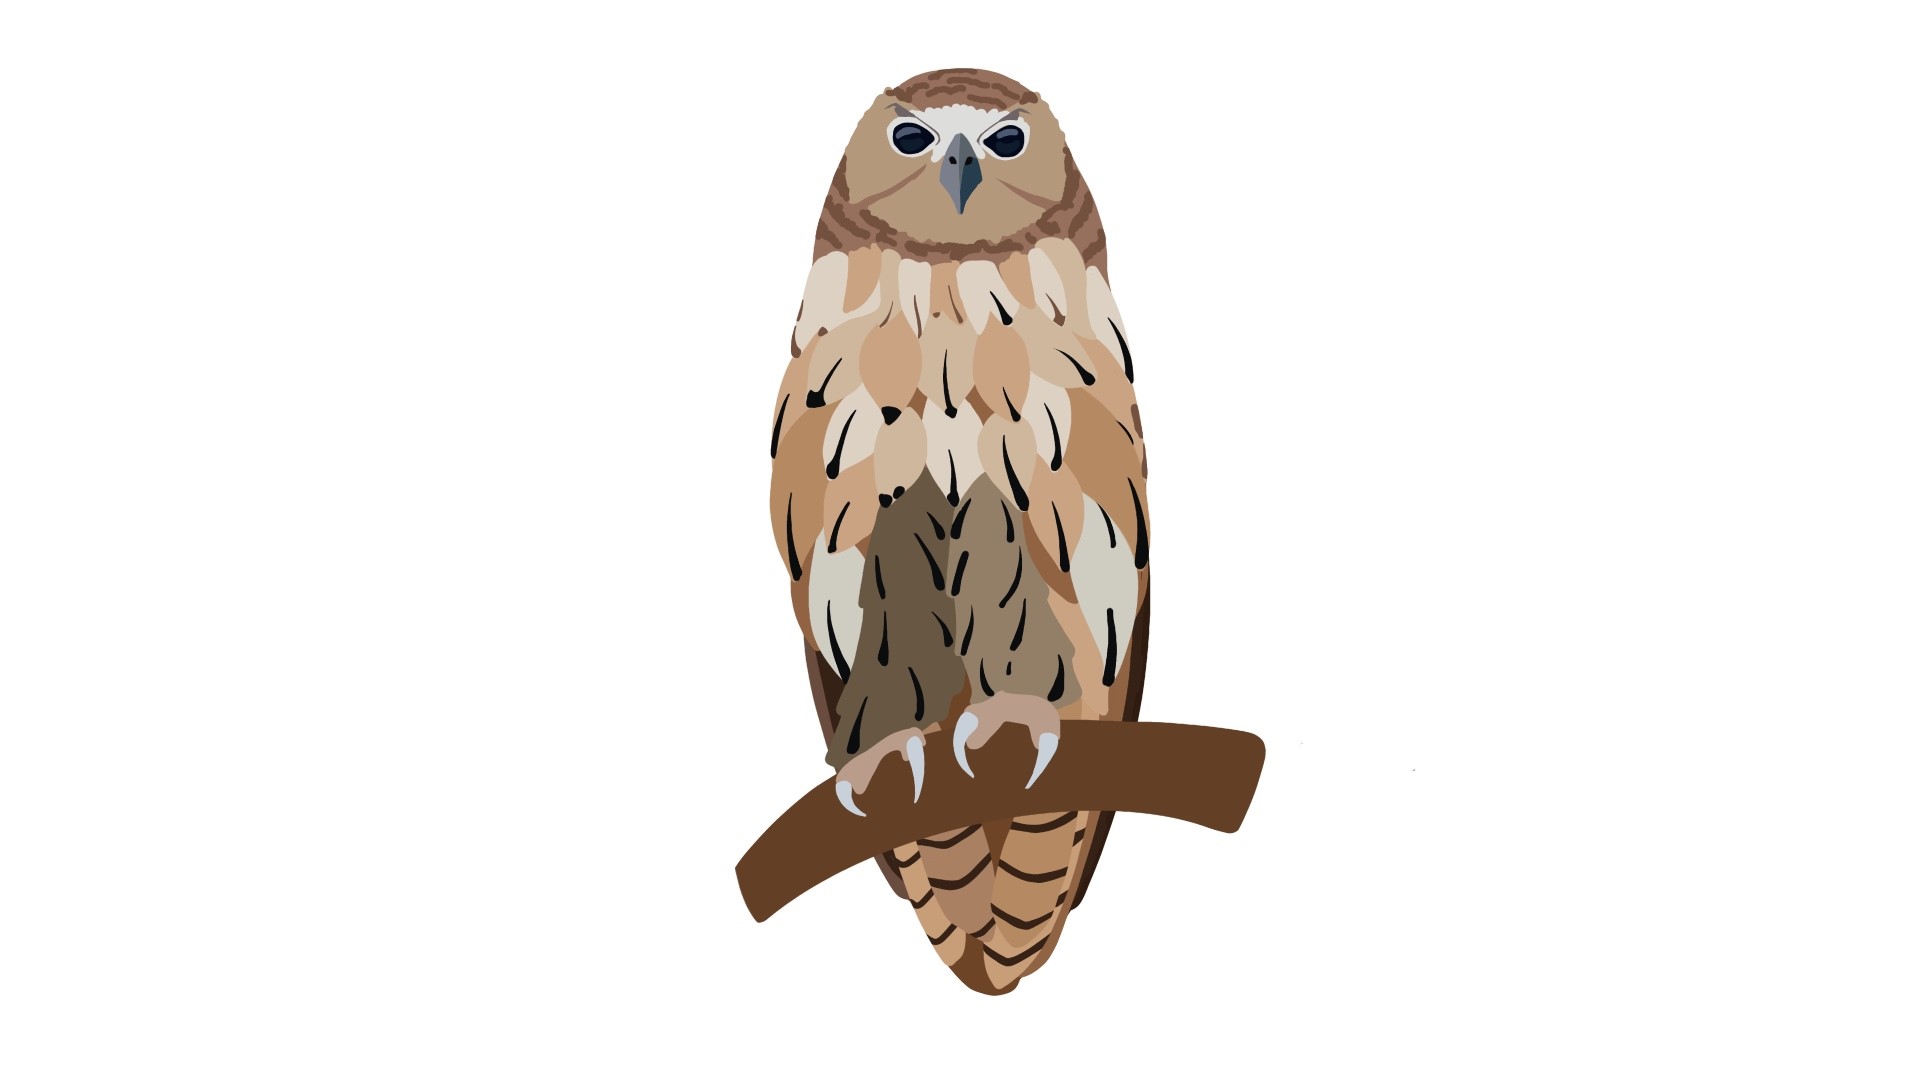 2D Animation of an Owl